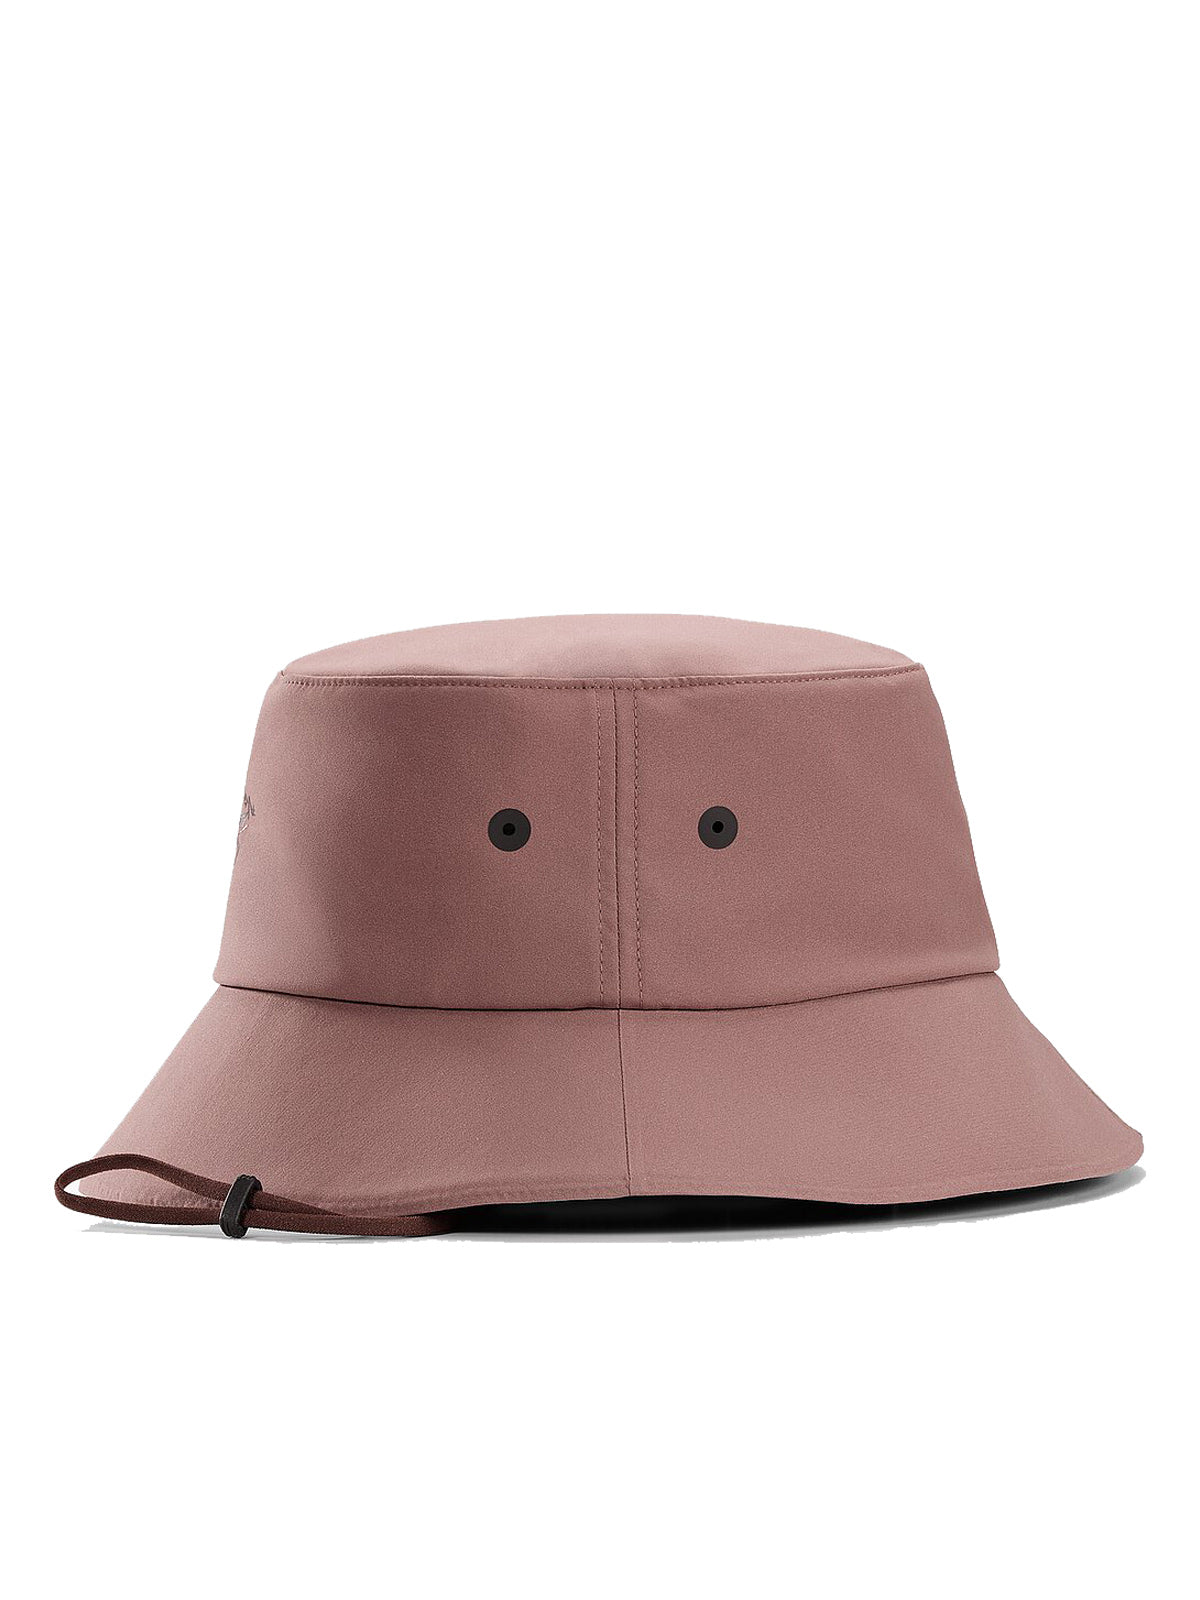 Sinsolo Hat for Men